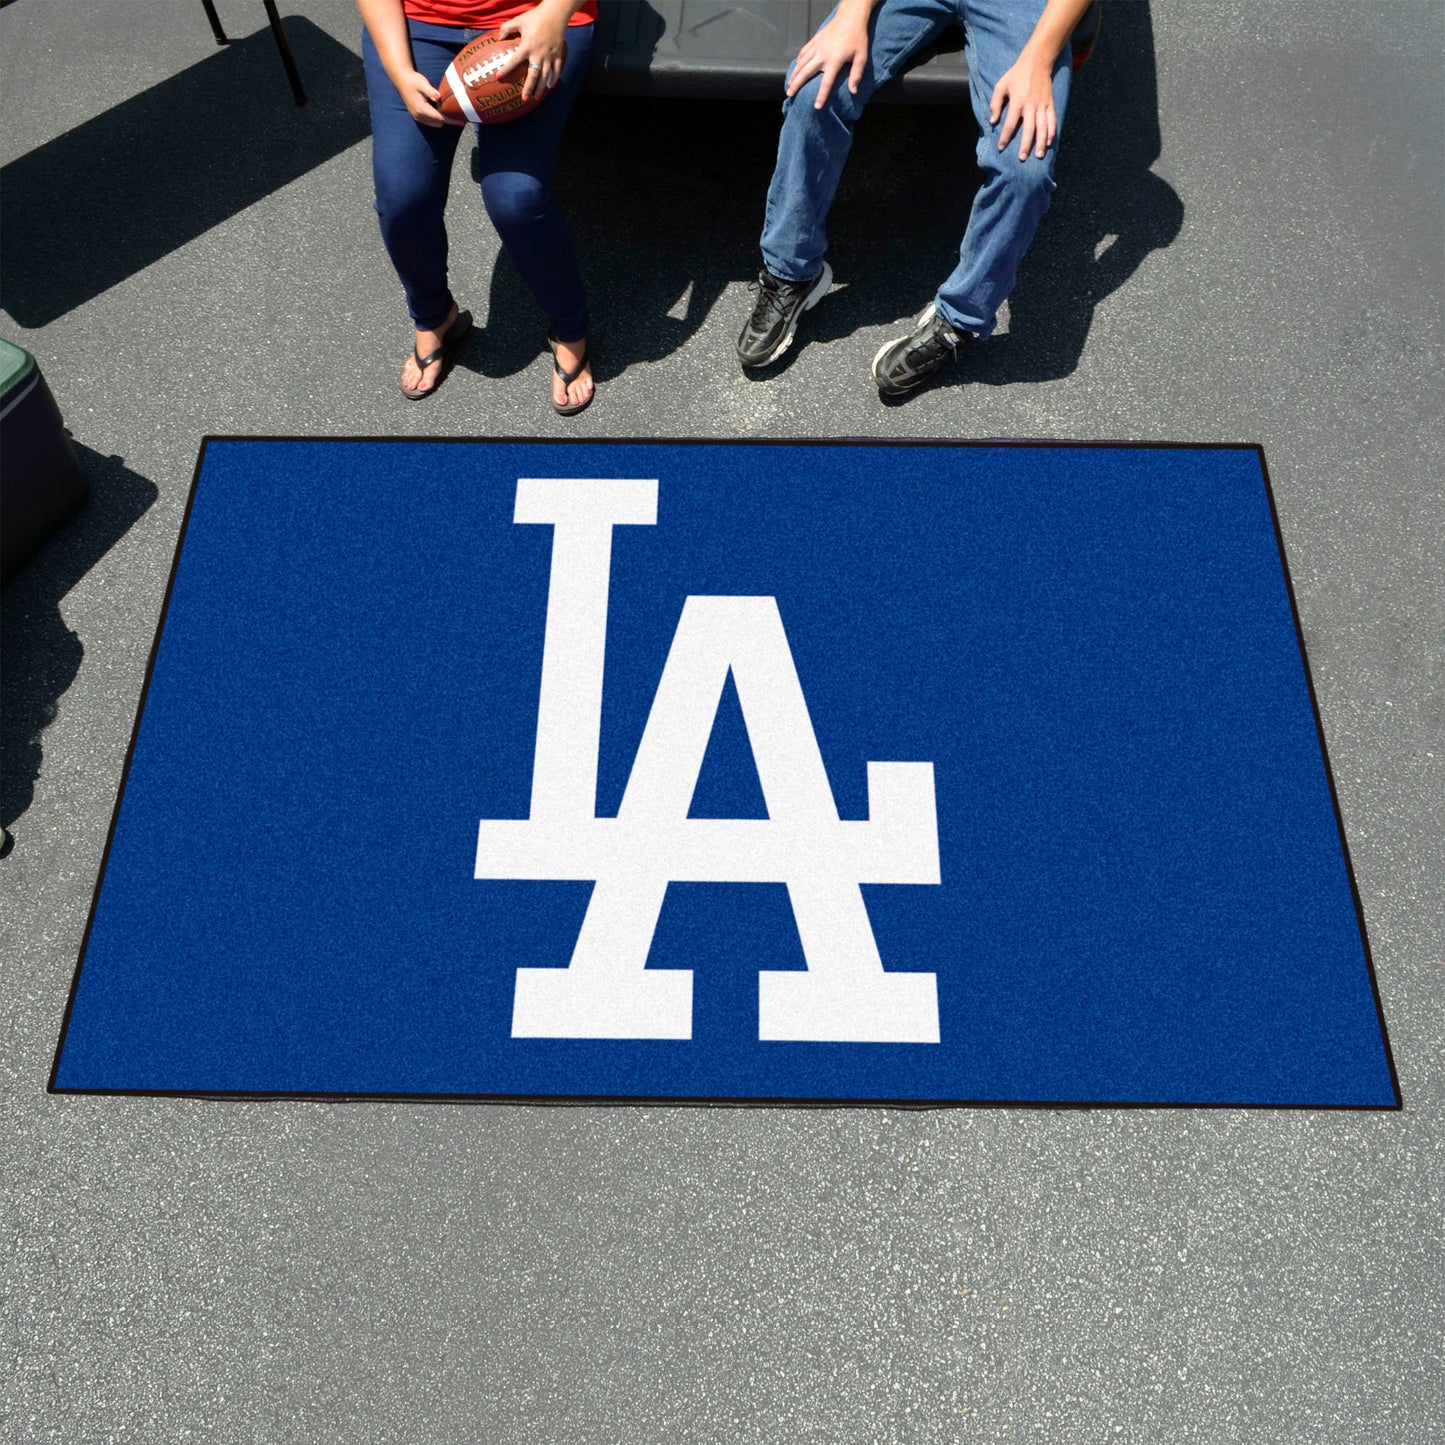 Los Angeles Dodgers Ulti-Mat Rug - 5ft. x 8ft. - LA Alternate Logo